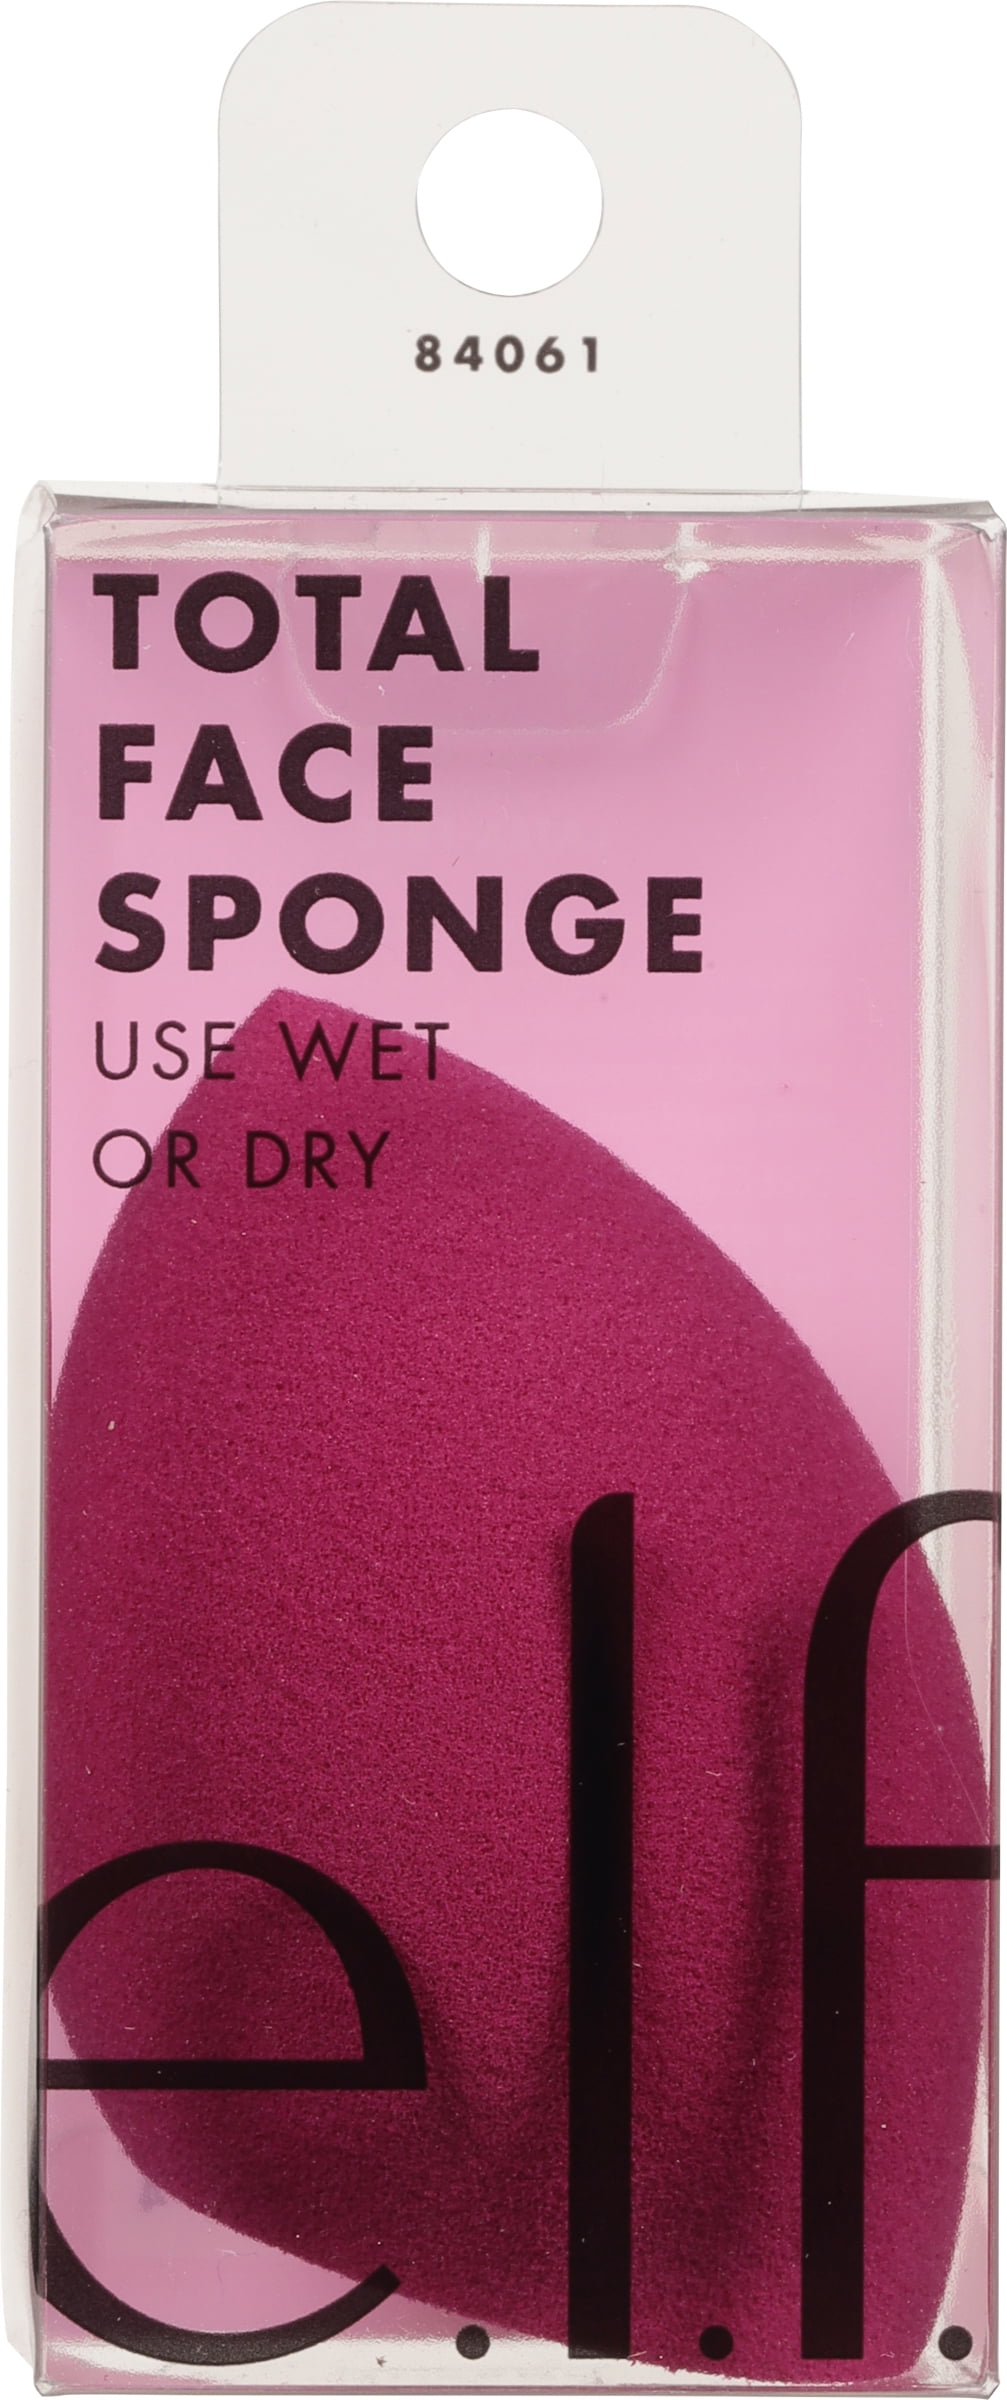 e.l.f. Cosmetics Total Face Sponge, Multi Sided, 1 Piece